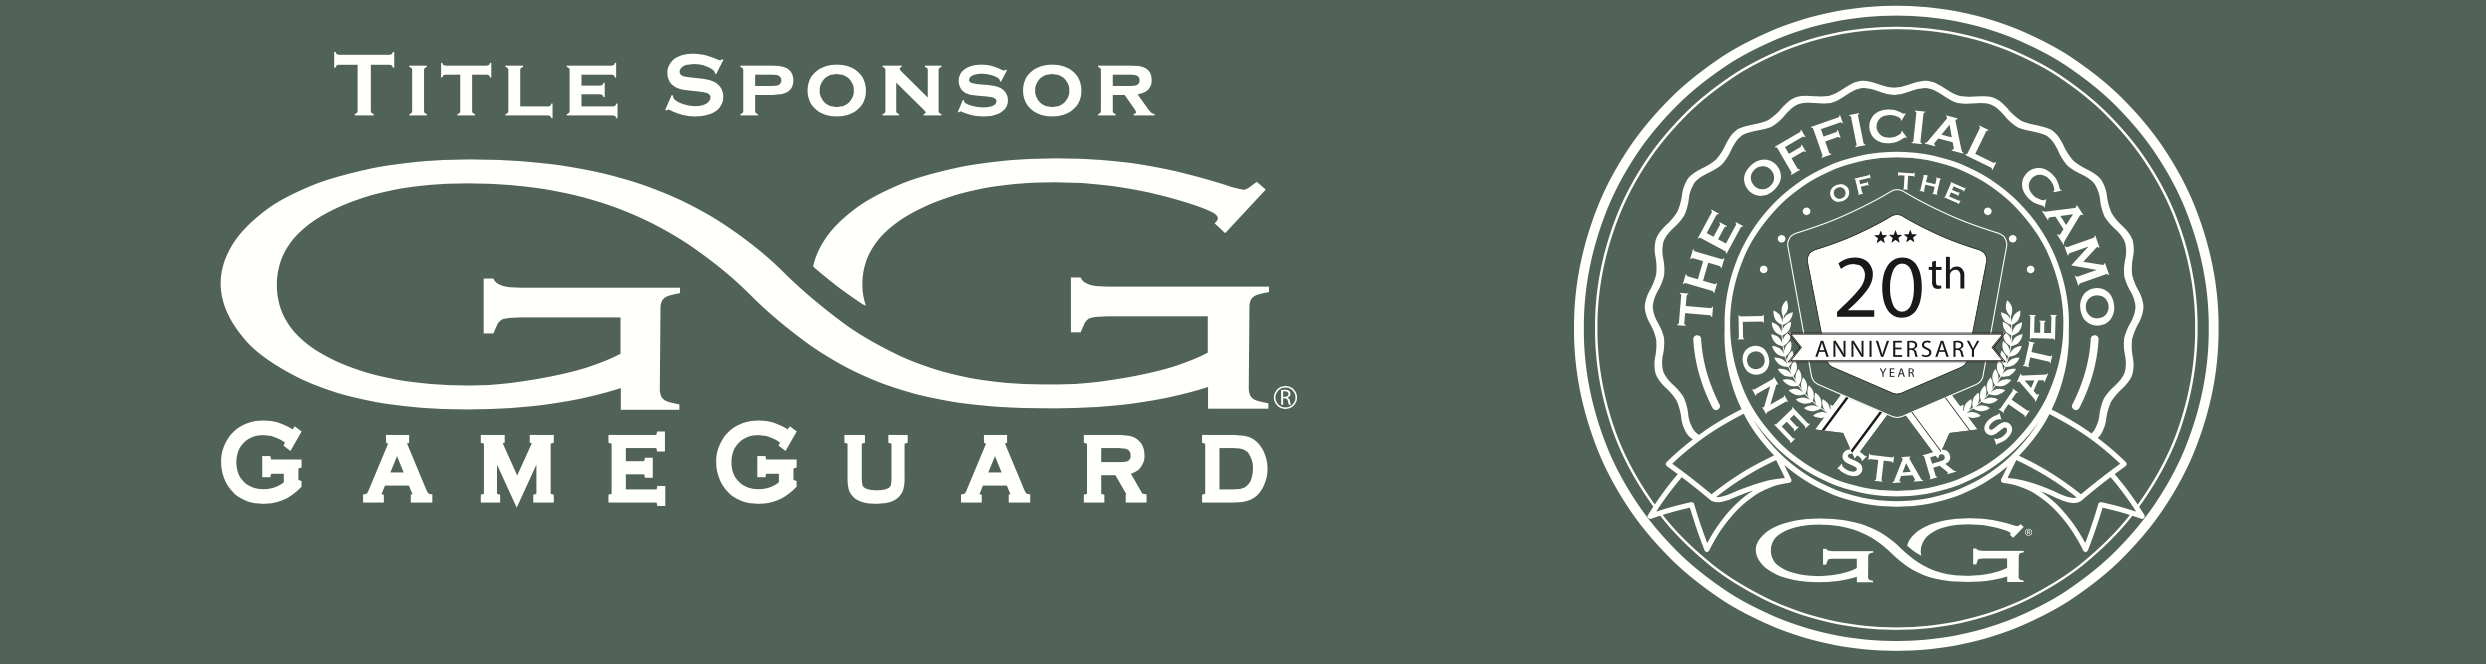 Title Sponsor: Game Guard